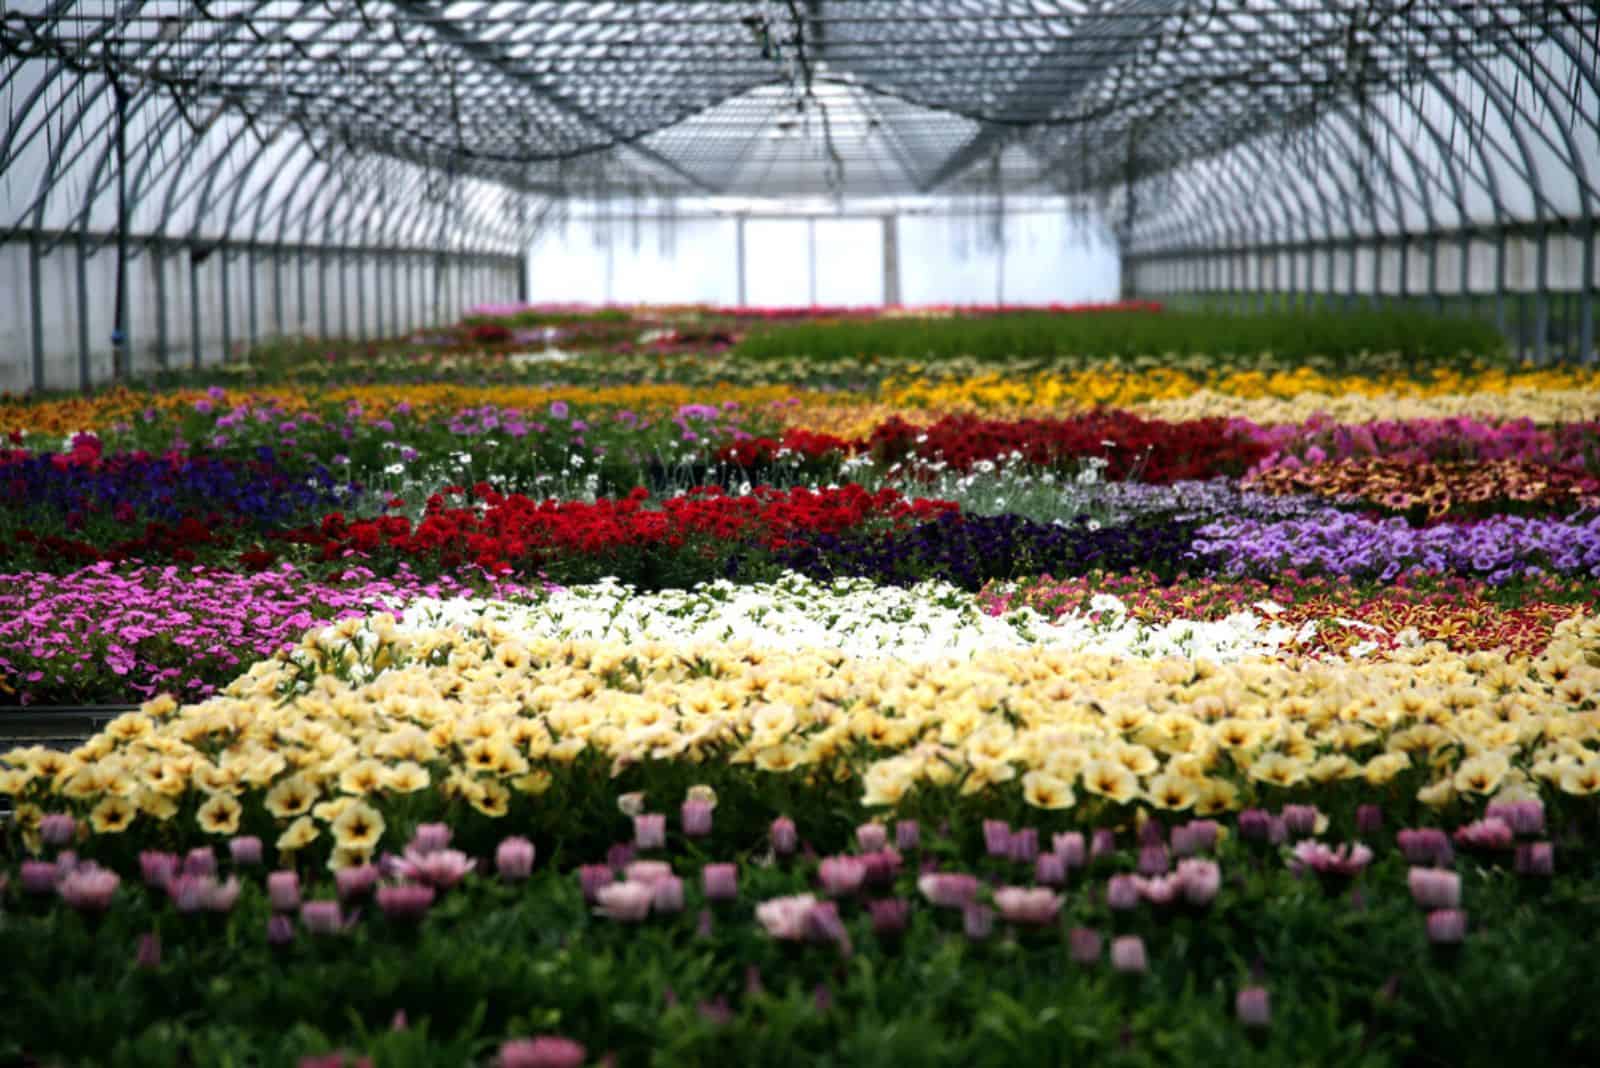 Greenhouse interior for growing garden flowers